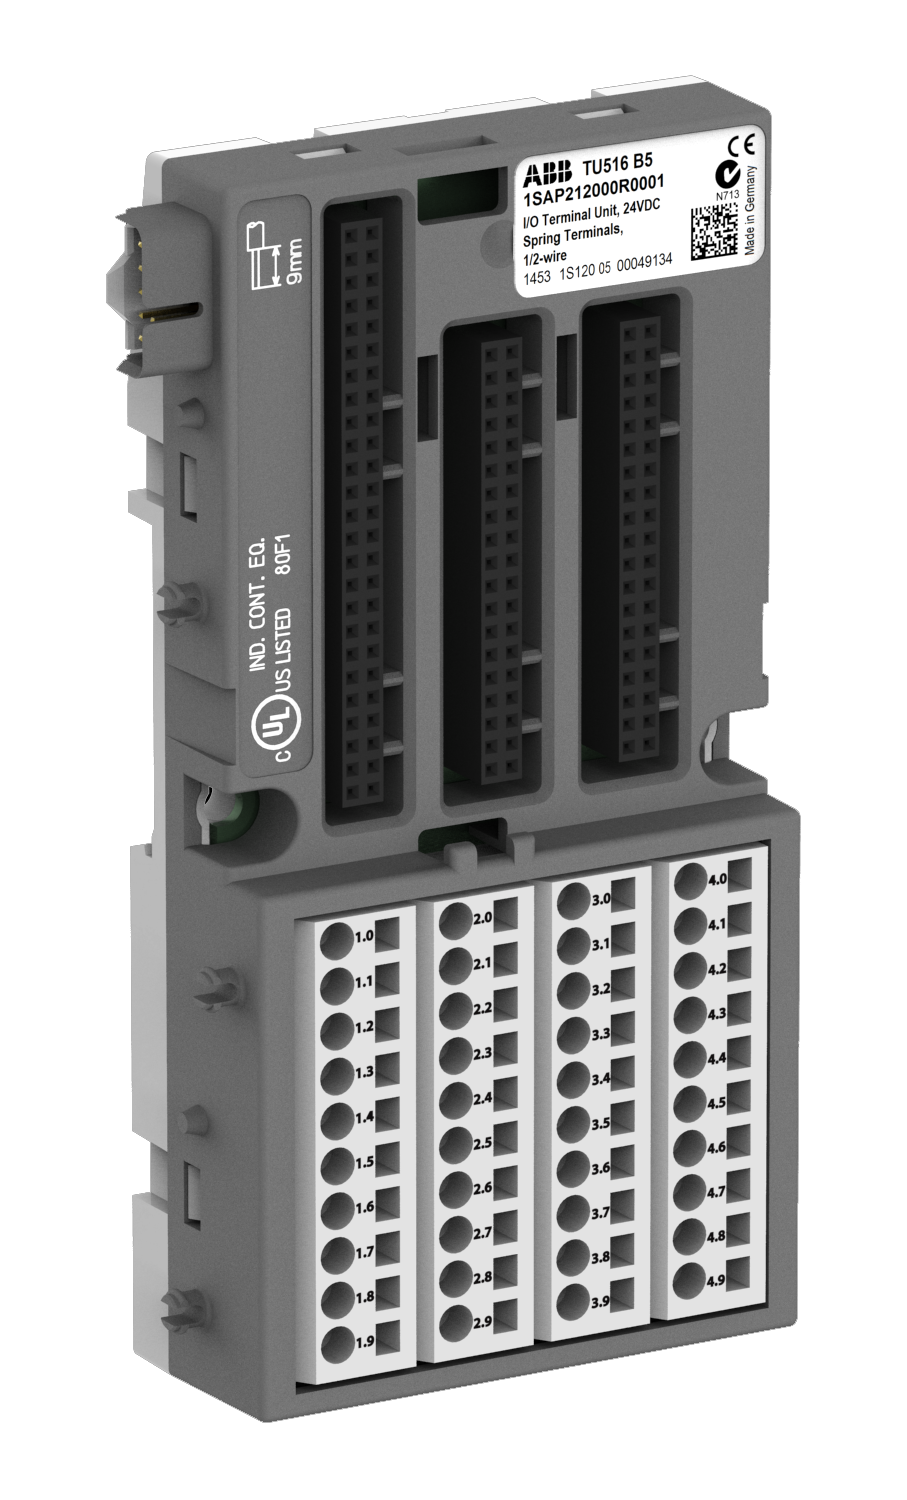 ABB TU516: S500 I/O terminal unit. For analog and 24 VDC digital modules. Spring terminals.